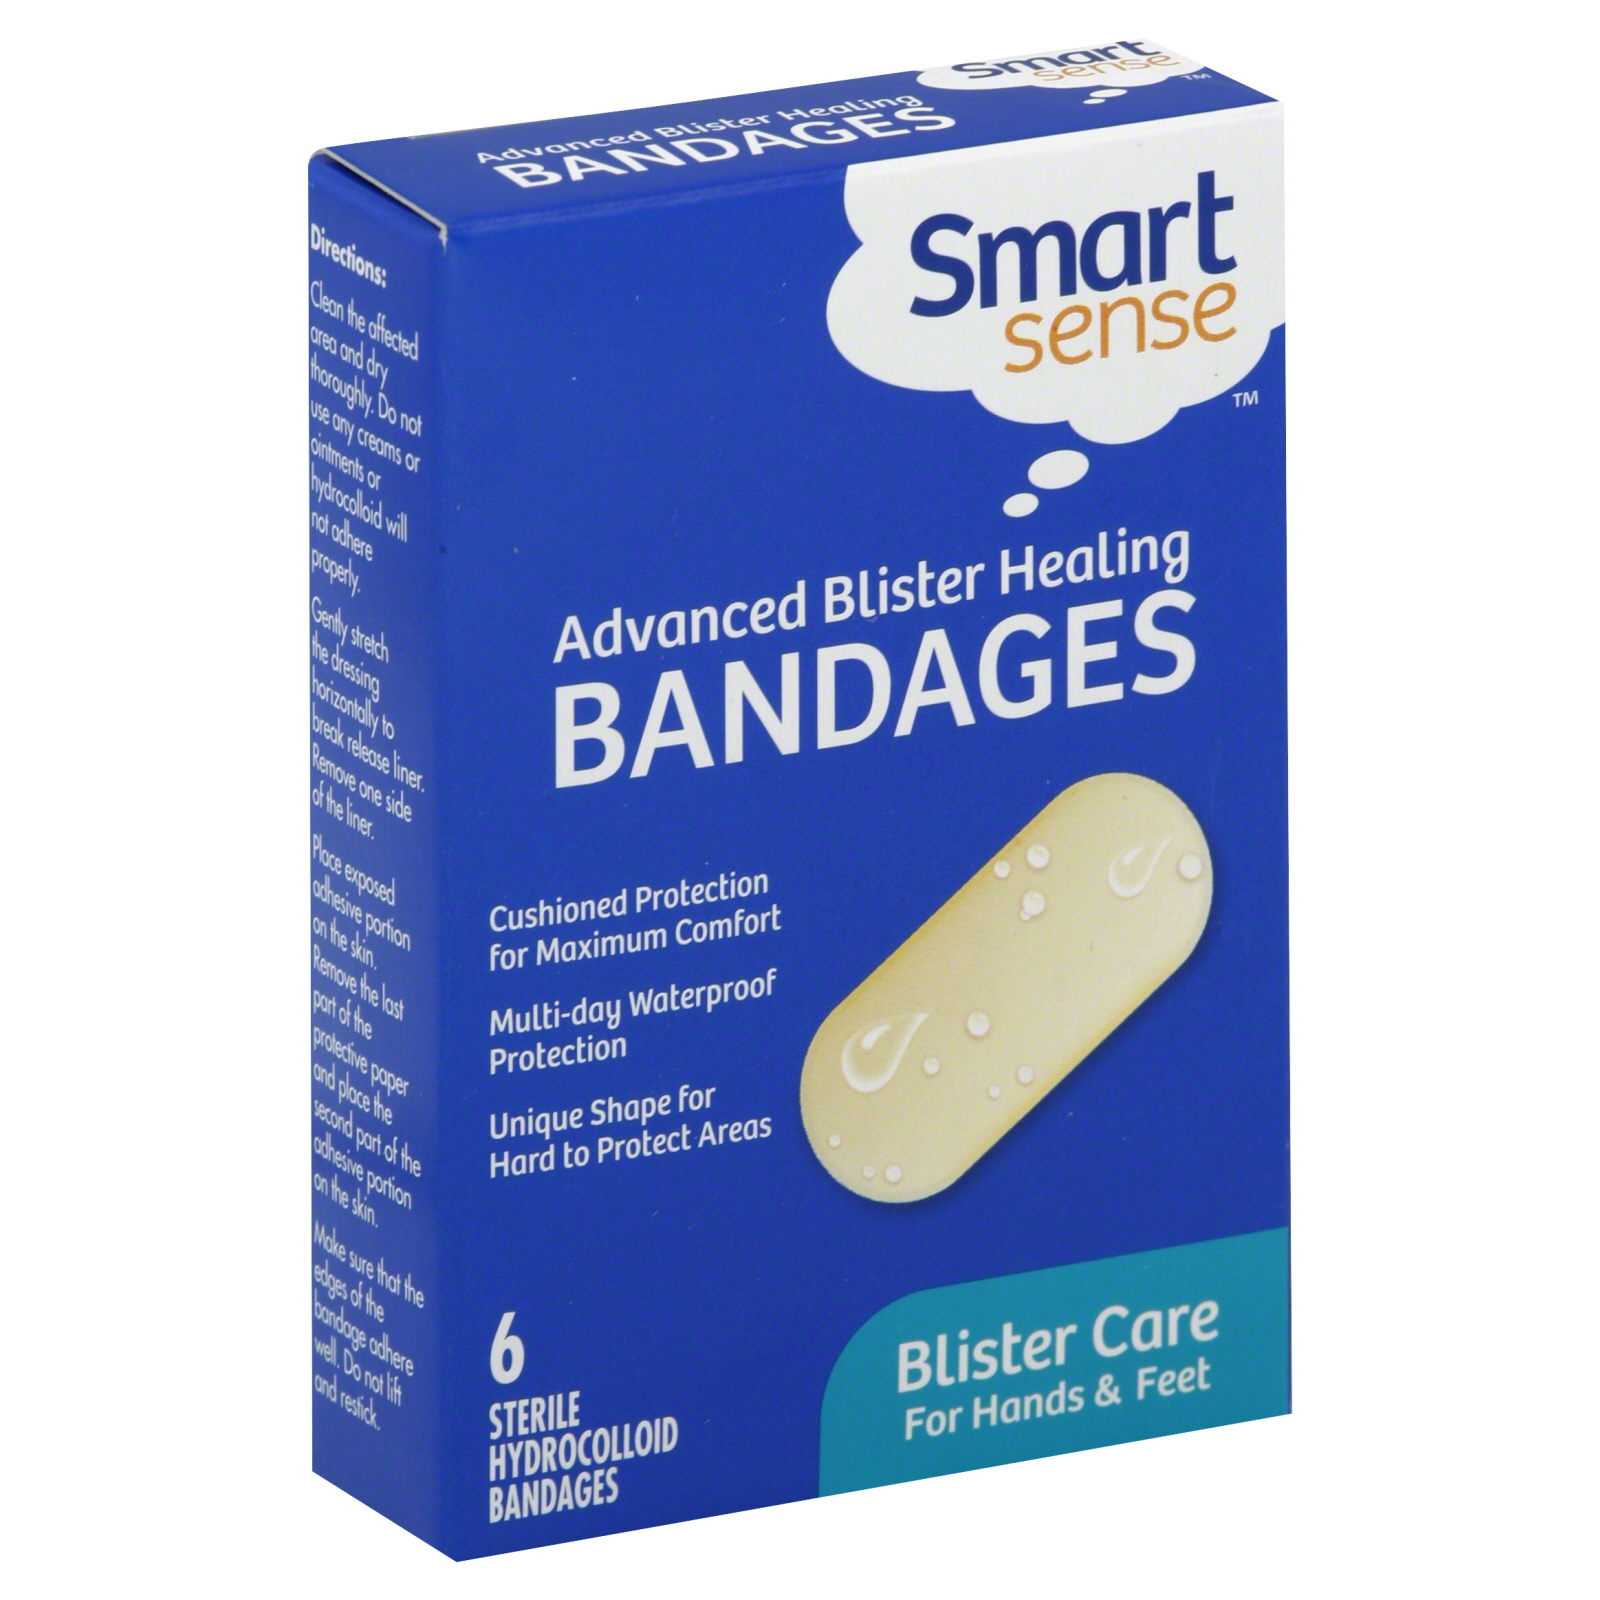 Smart Sense Bandages, Advanced Blister Healing, Hands & Feet 6 bandages